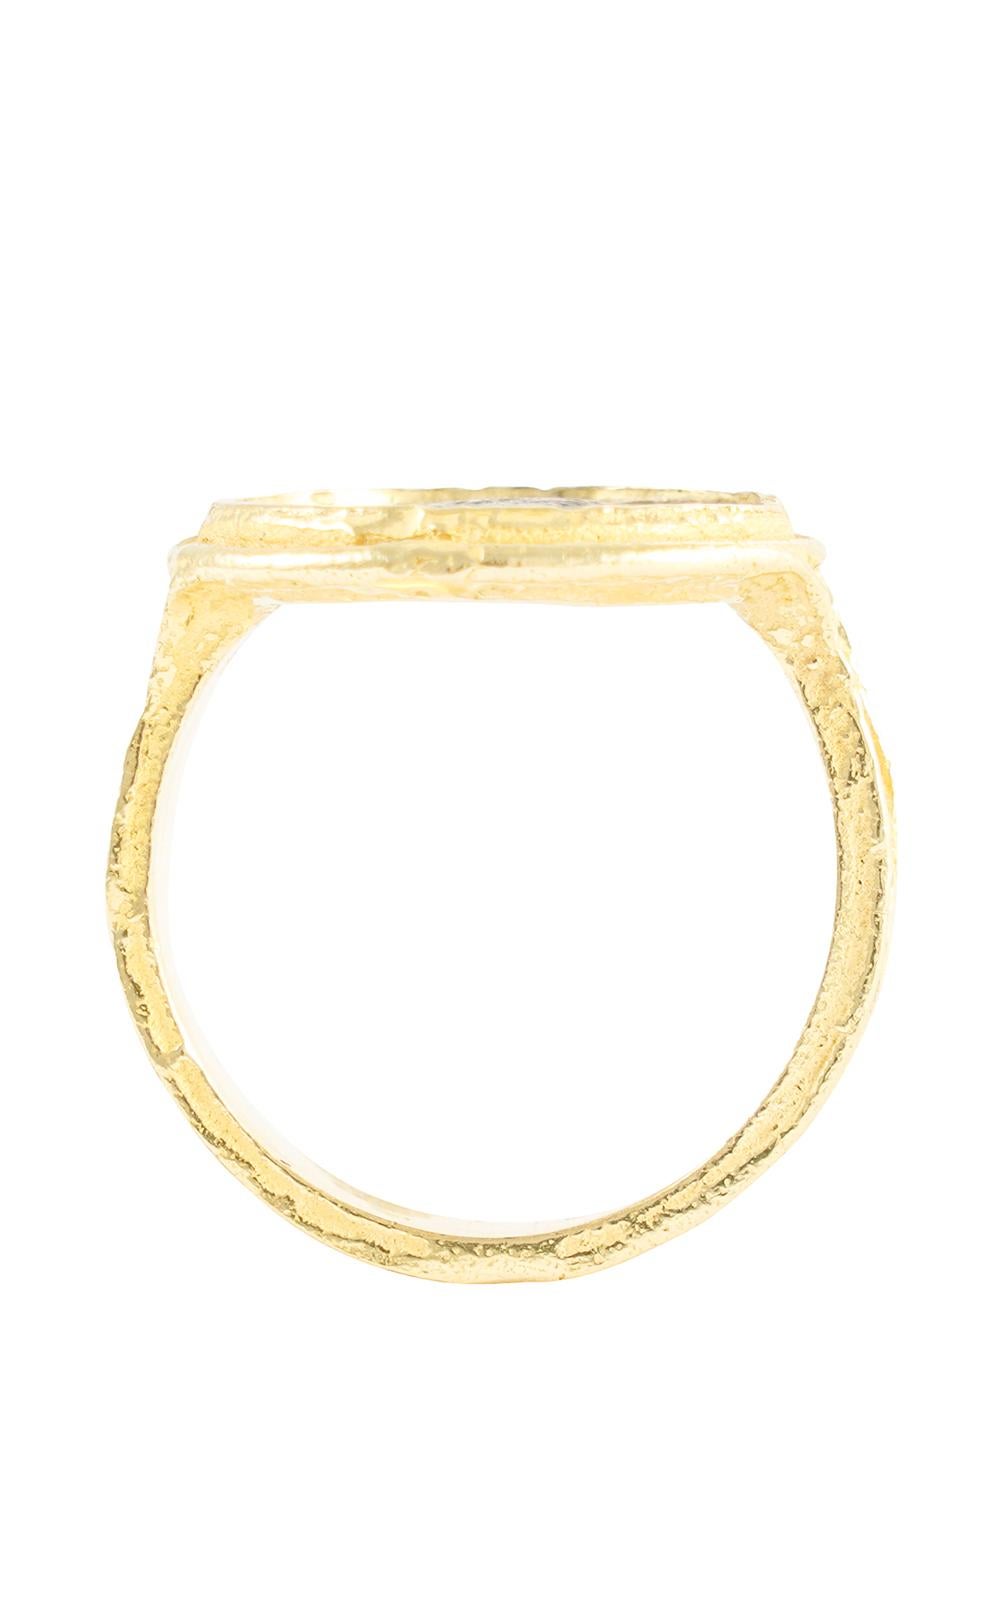 Contemporary Sacchi Ancient Roman Coin Ring 18 Carat Yellow Gold Satin